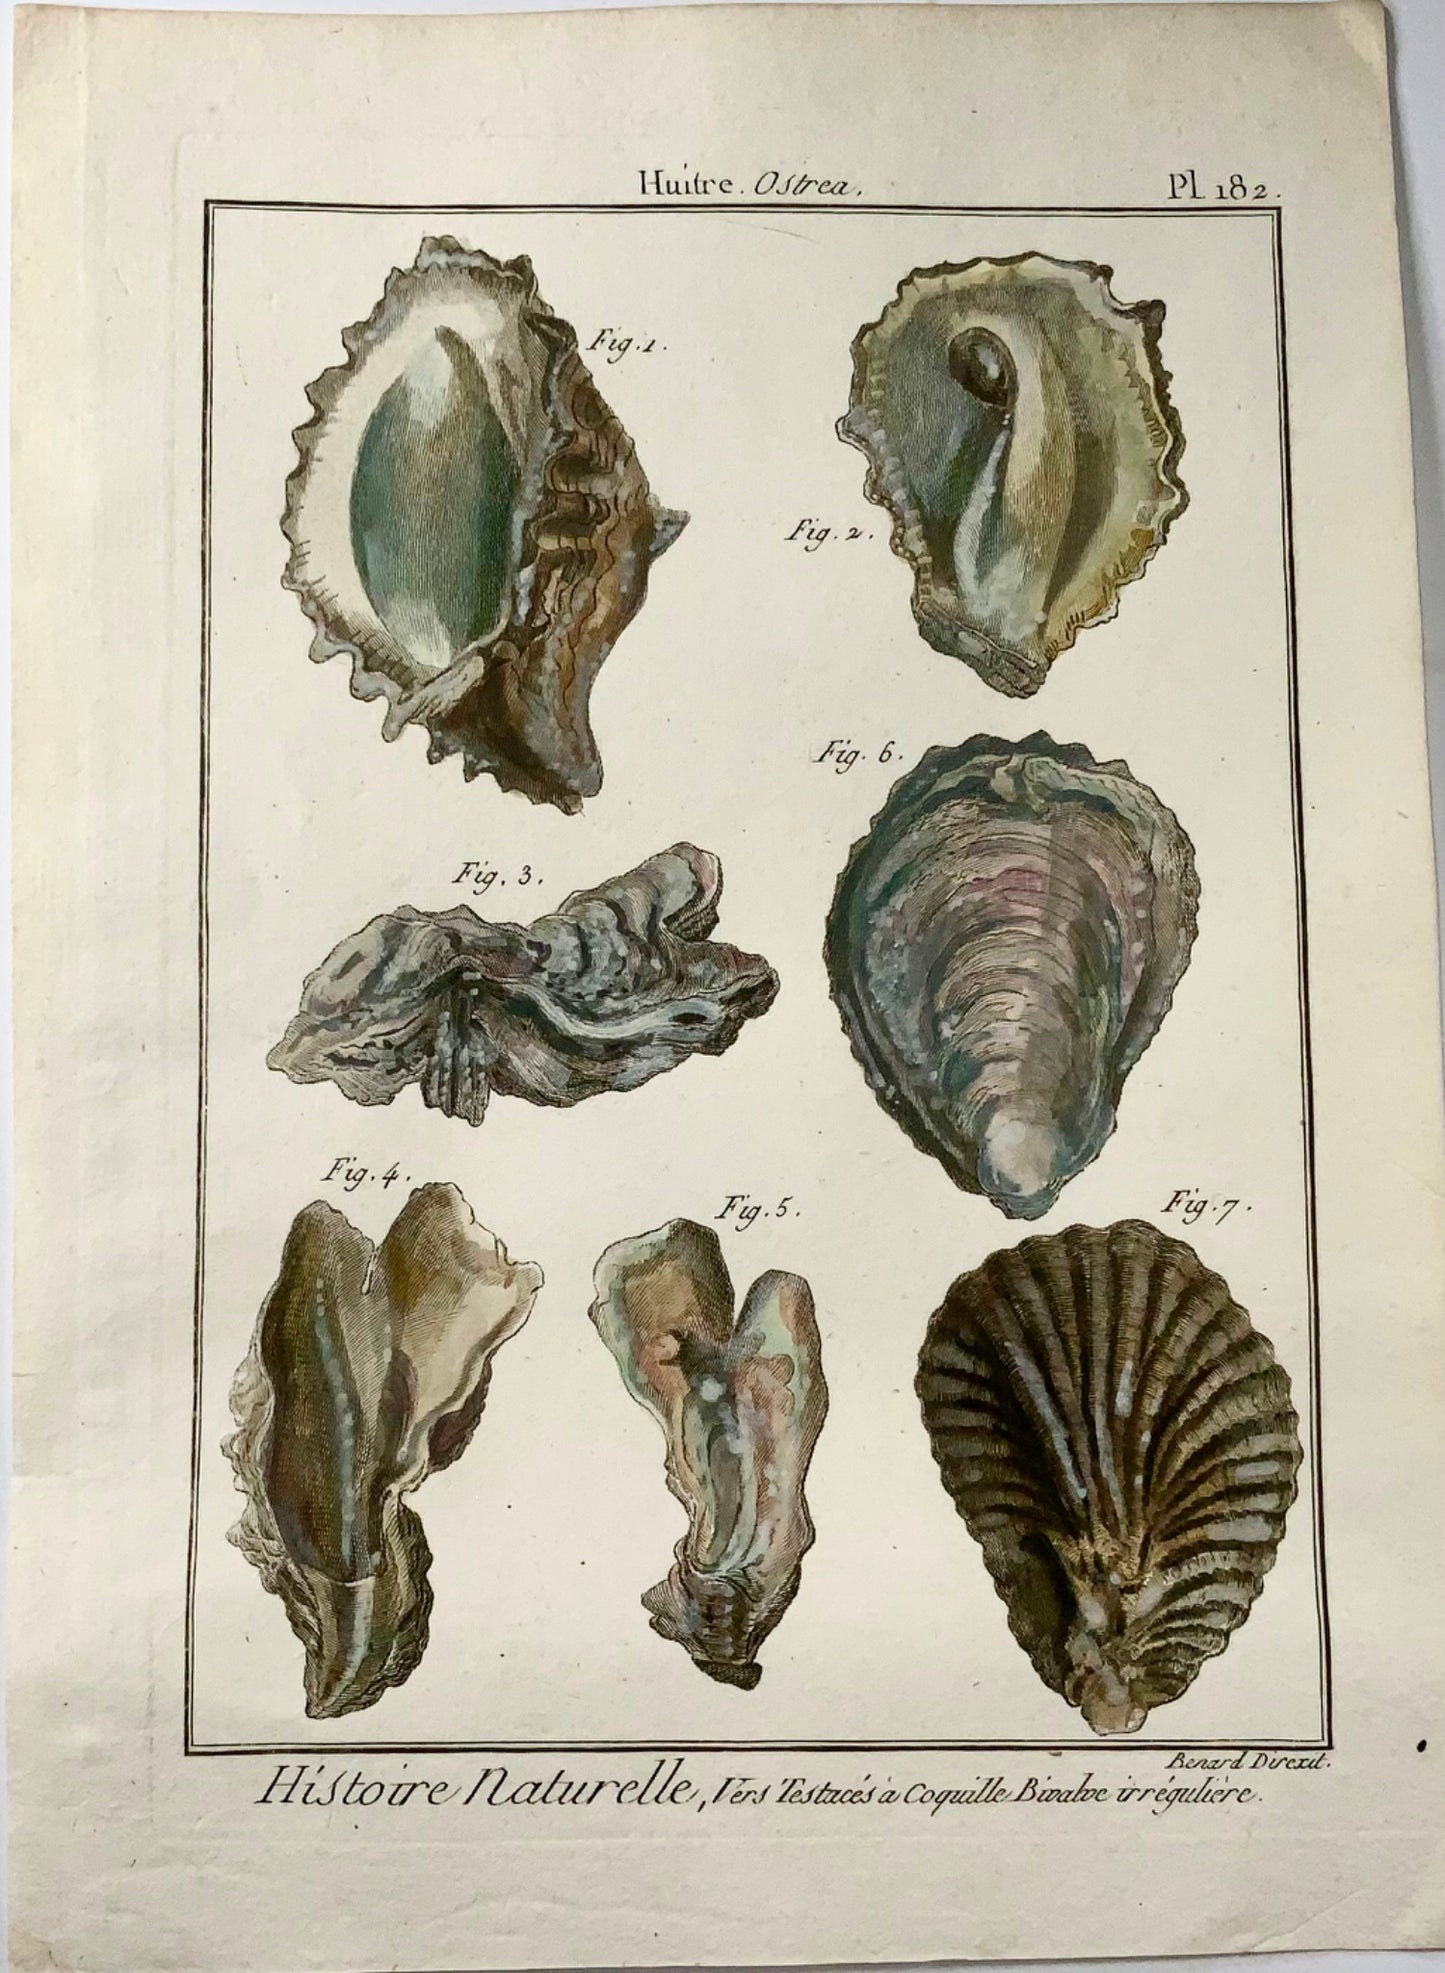 1789 Huîtres, Benard sc. in-quarto, couleur à la main, gravure, vie marine